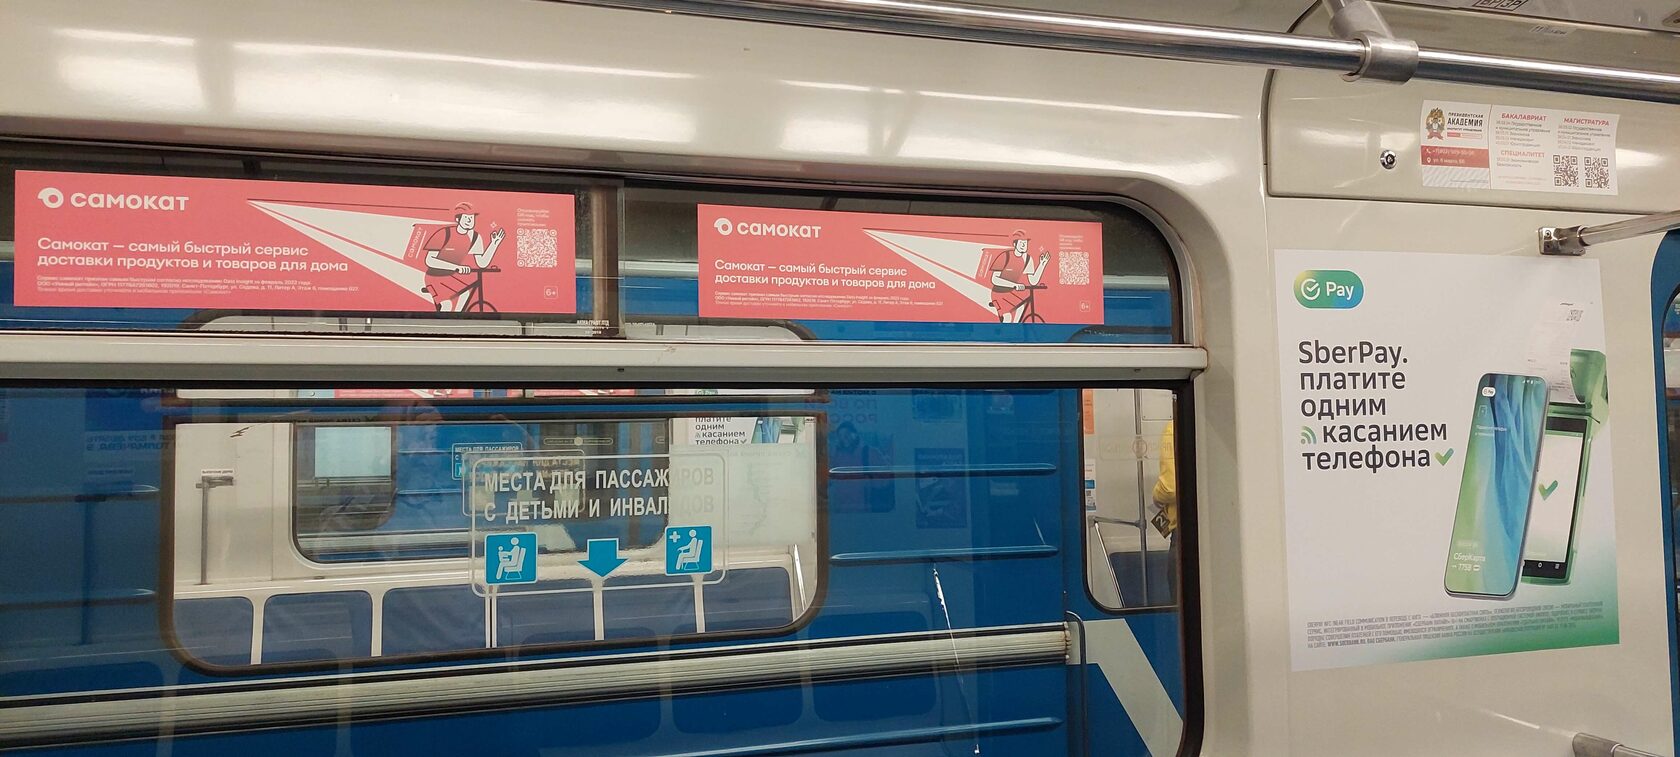 Заказ рекламы в метро